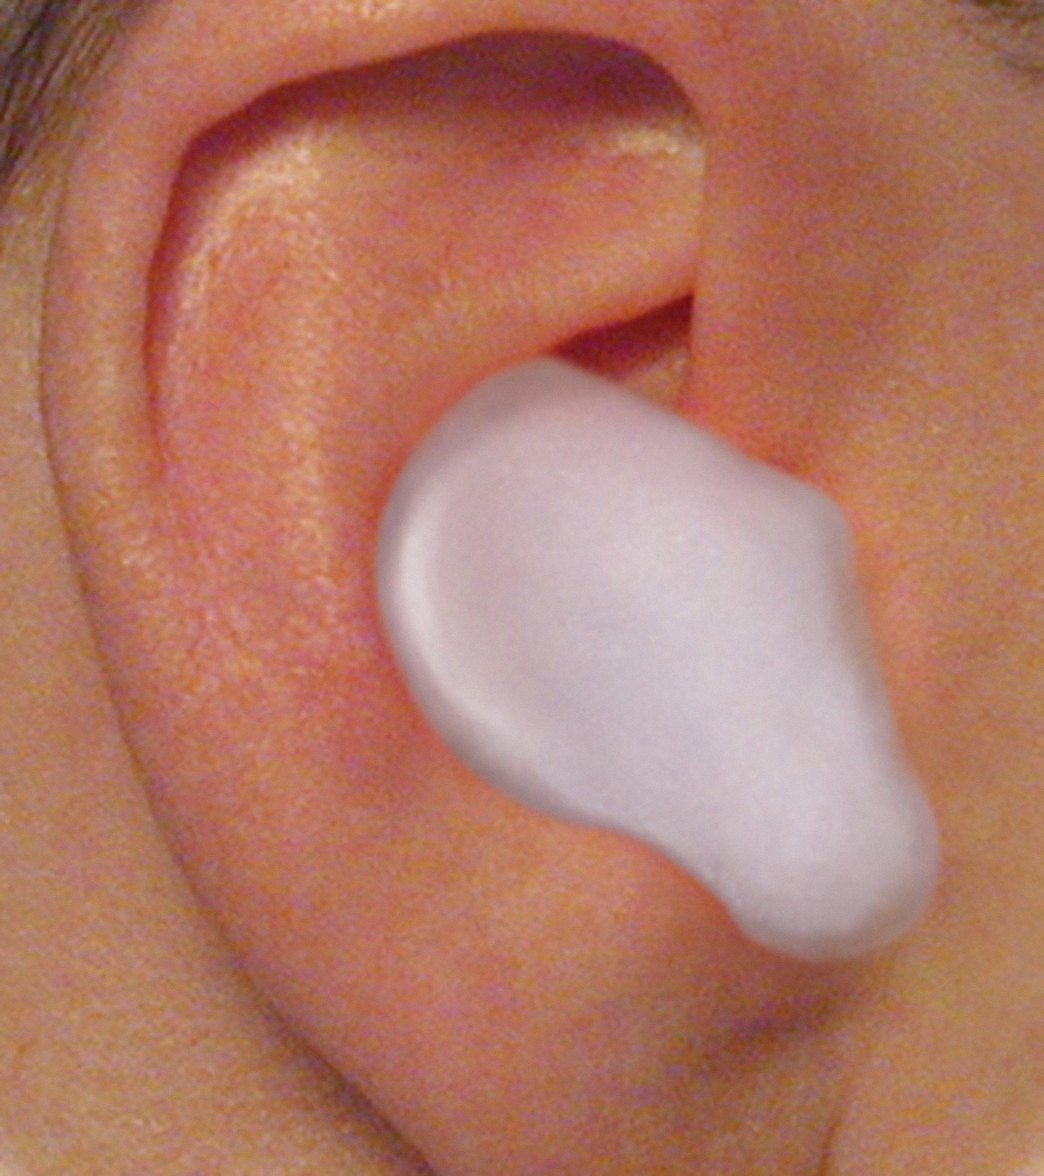 MACK'S SILICONE EAR PLUGS